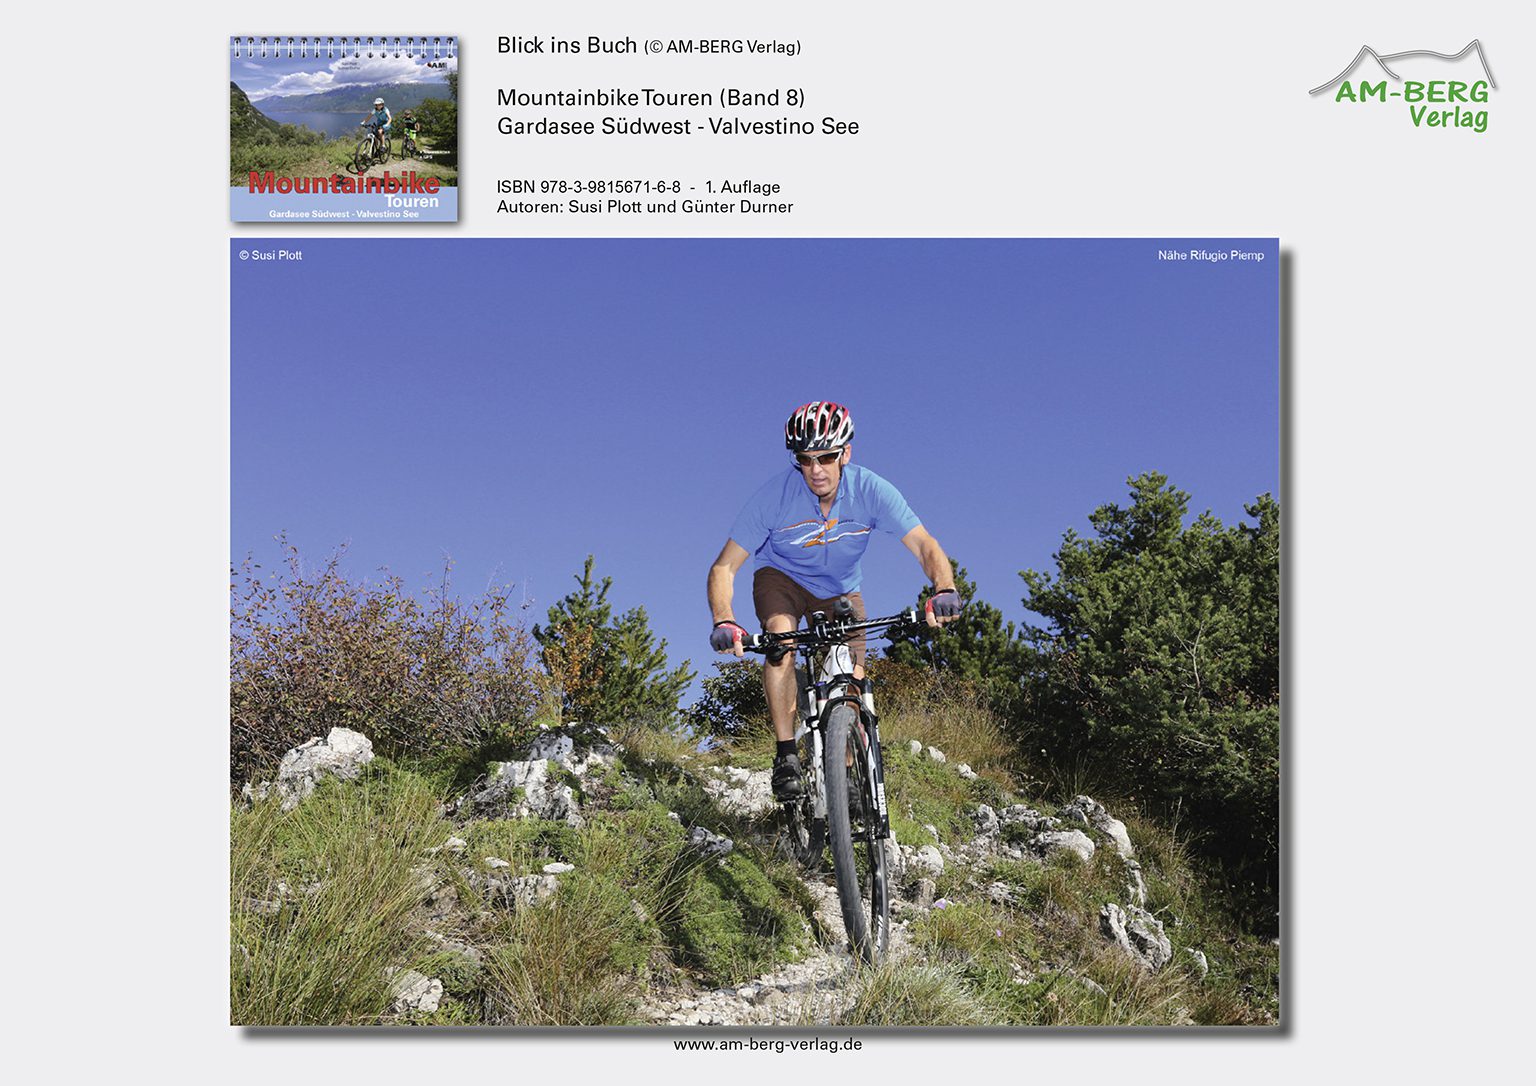 Mountainbike Touren Gardasee Südwest - Valvestino See (Band 8)_BlickinsBuch4